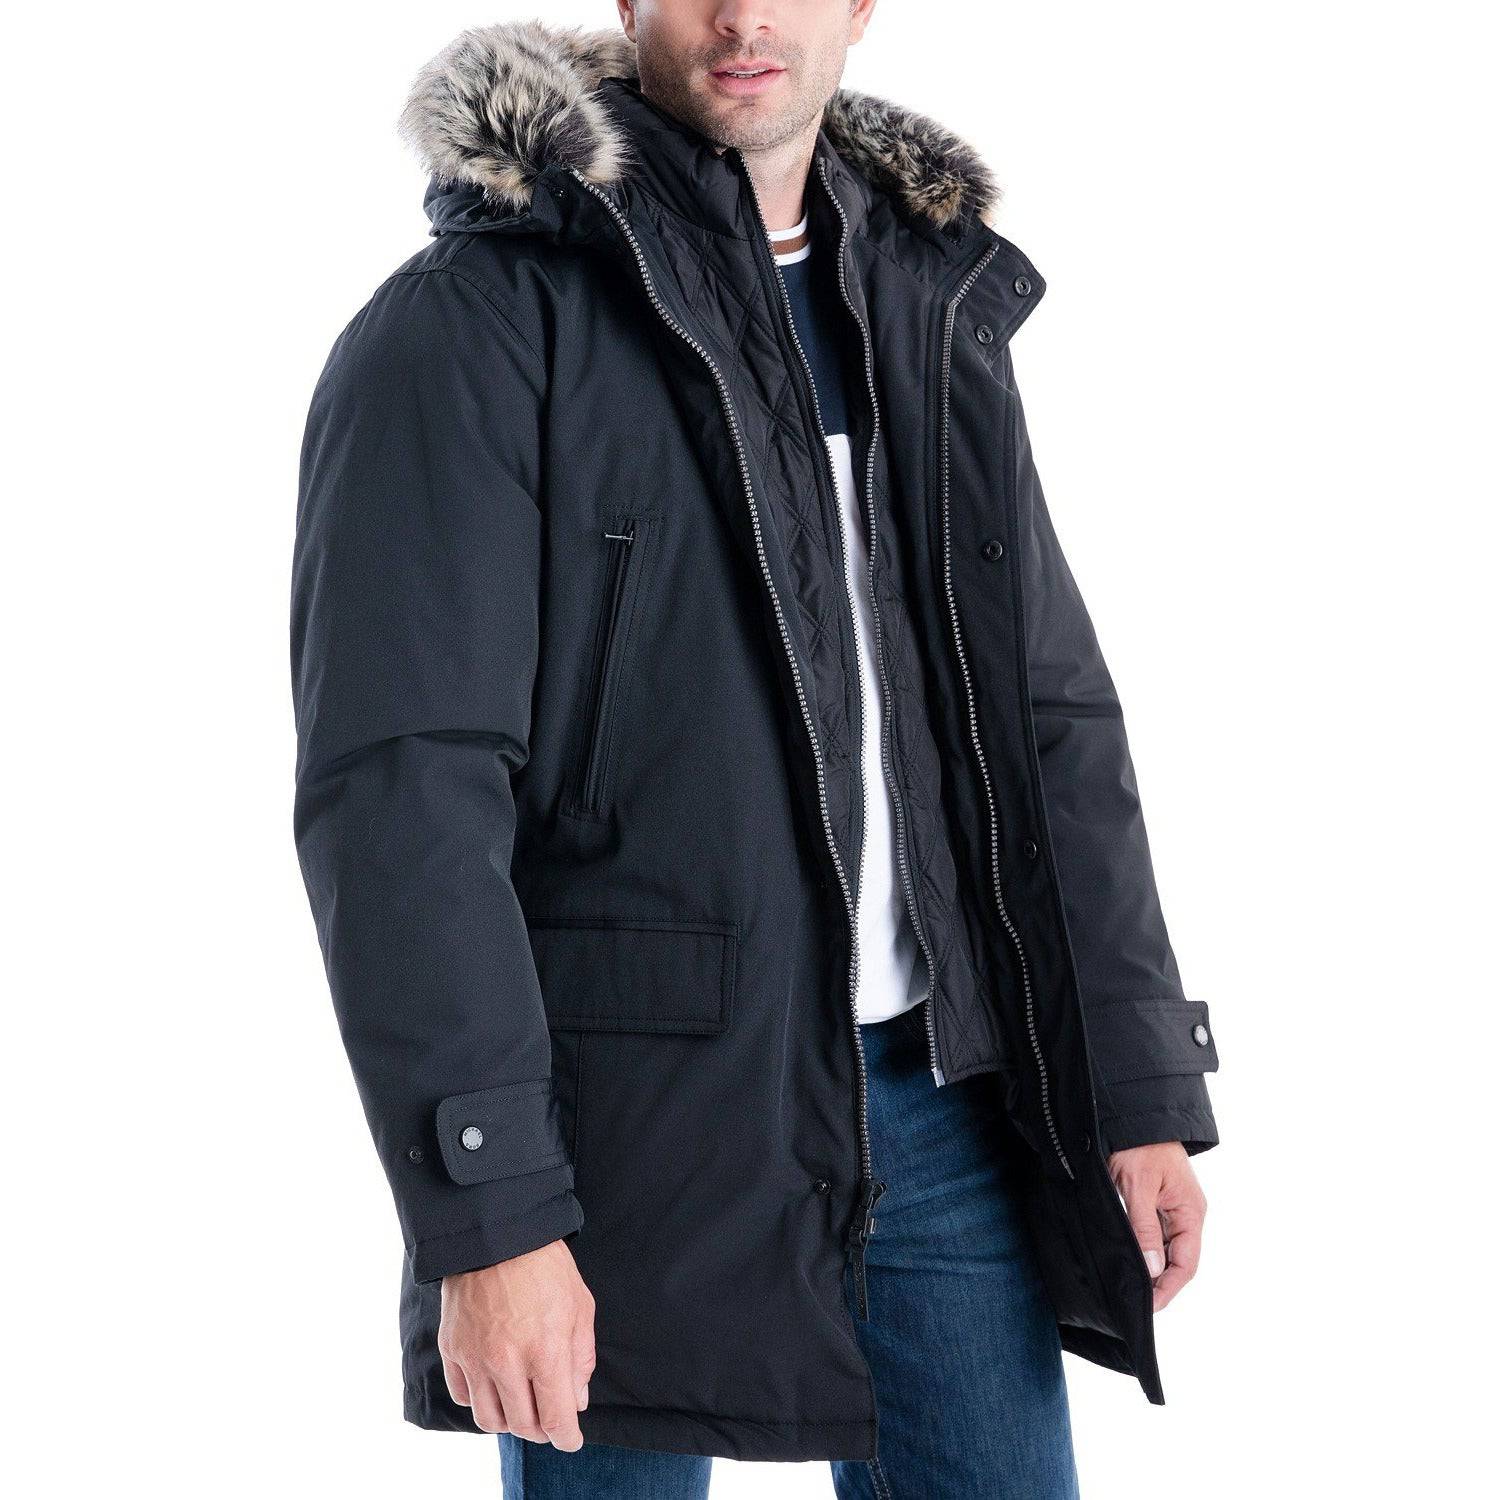 Michael Kors Men's Snorkel Parka Coat – Zooloo Leather